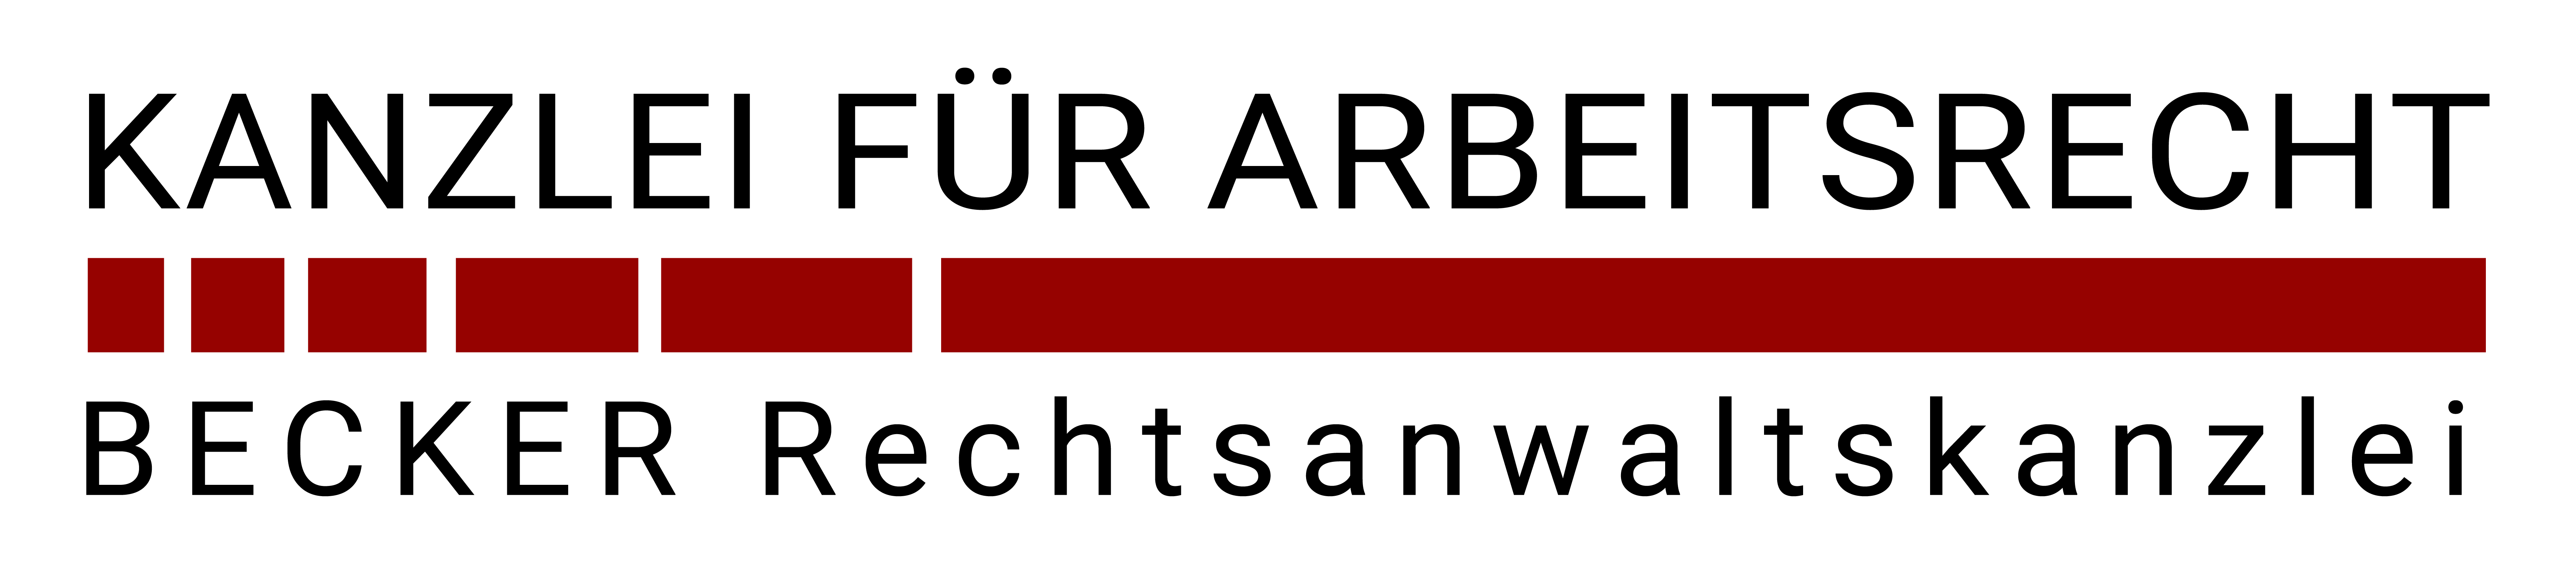 BECKER Rechtsanwaltskanzlei - Kanzlei für Arbeitsrecht in Wiesbaden